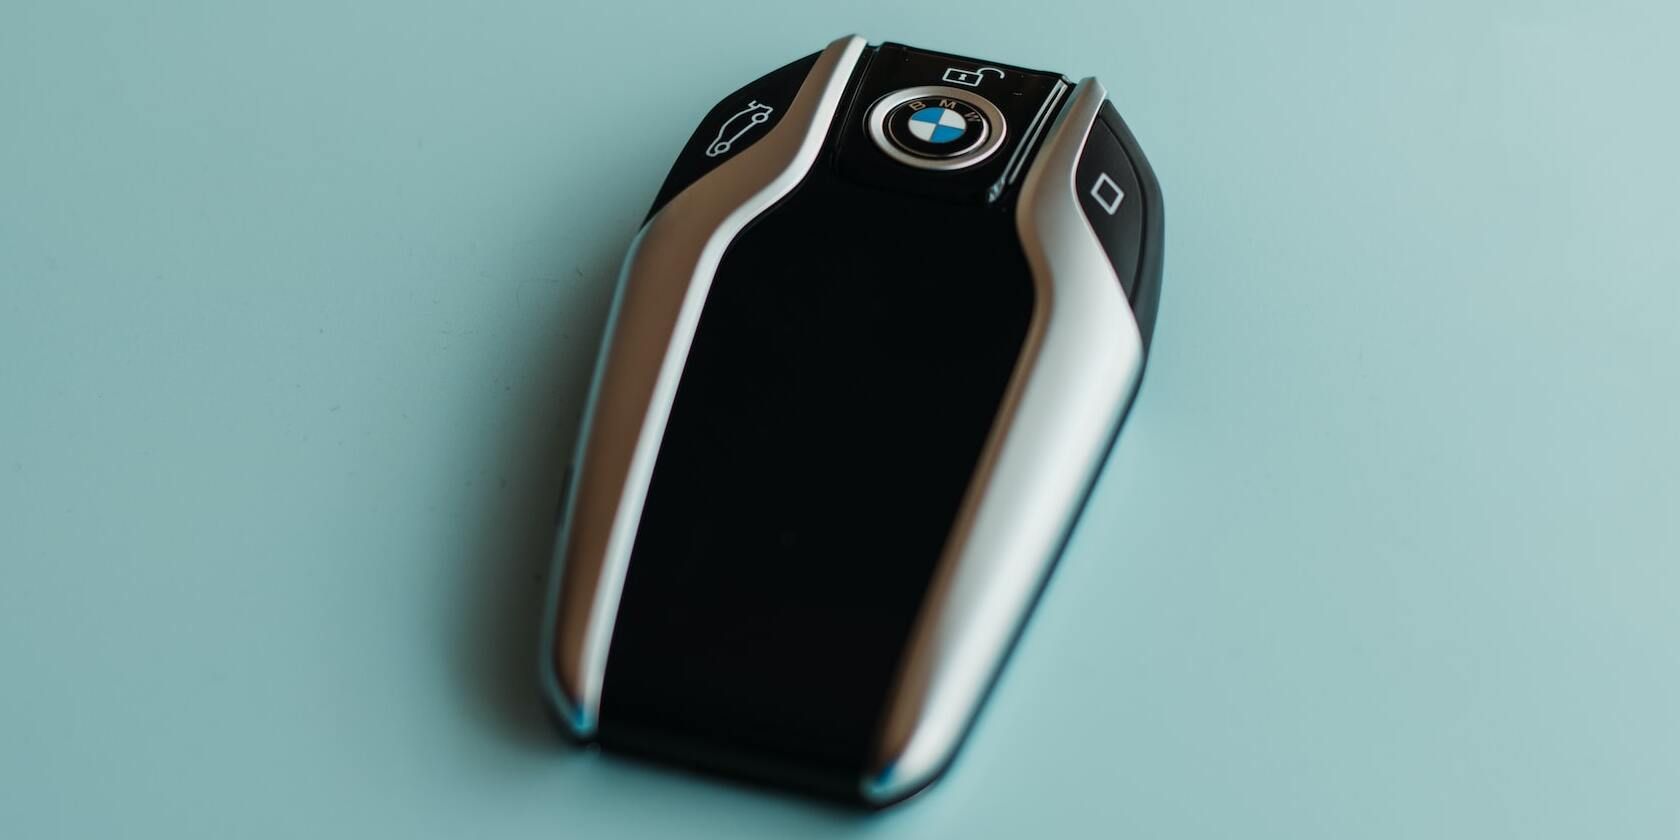 Image of a BMW smart key